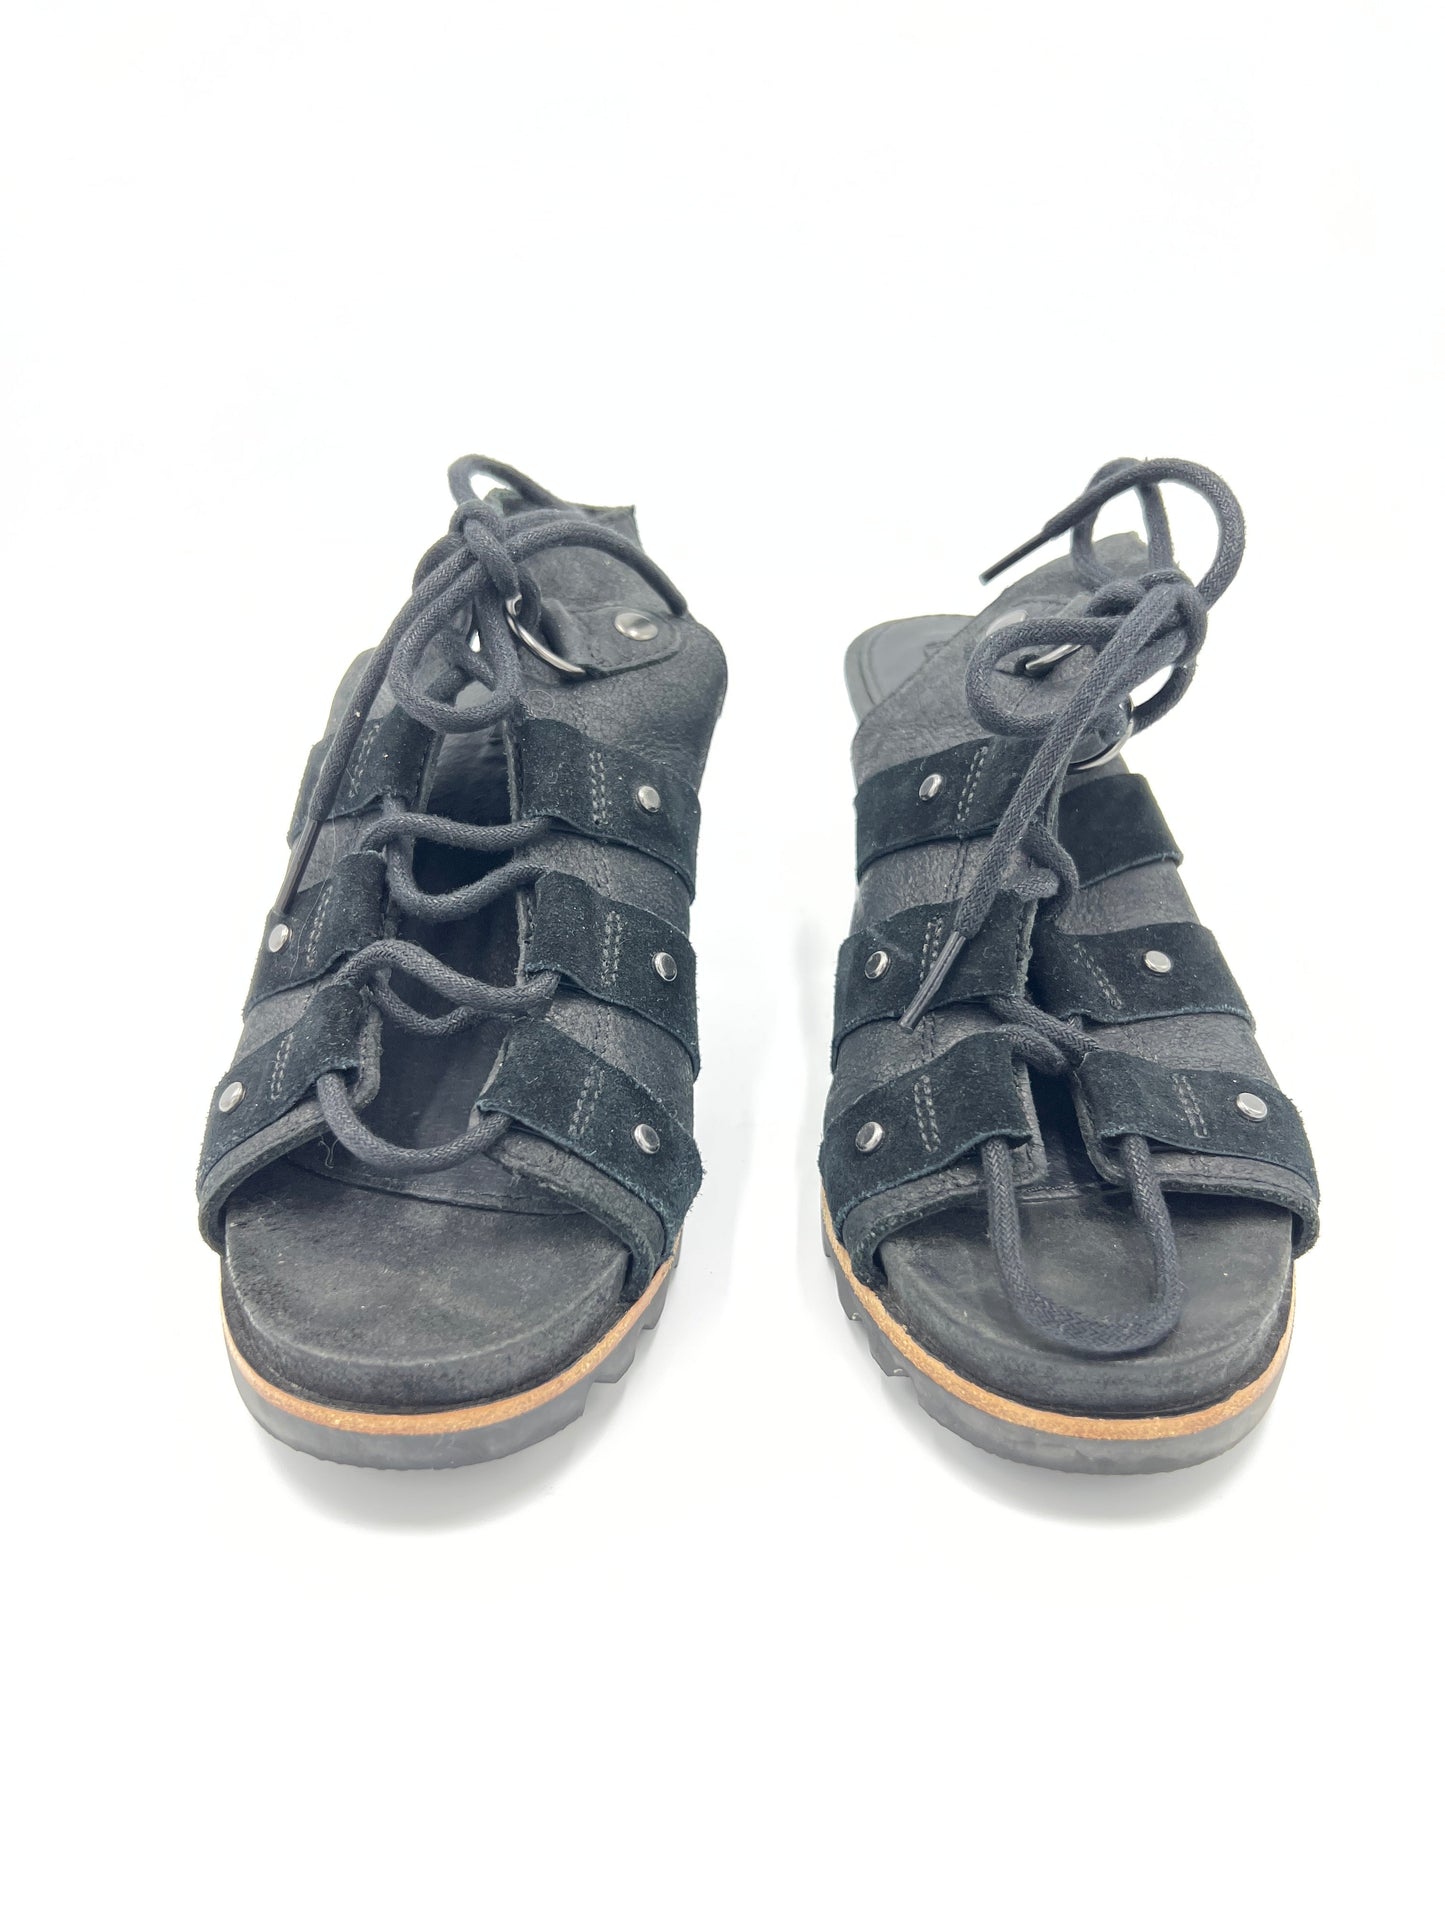 Shoes Heels Block By Sorel  Size: 7